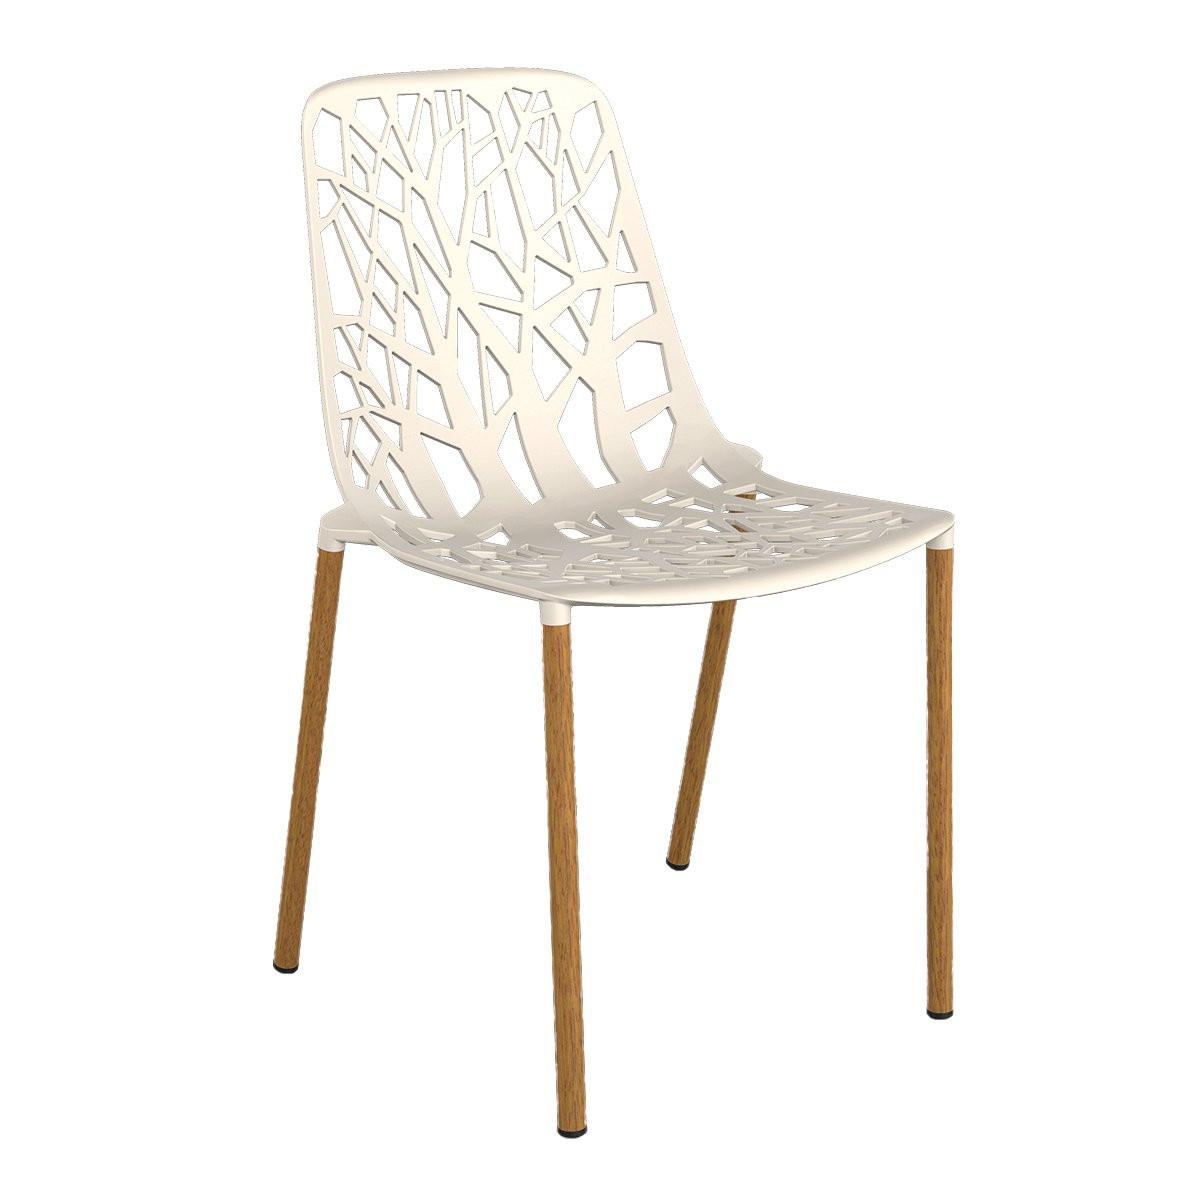 Fast Forest Chair Iroko Legs Creamy White